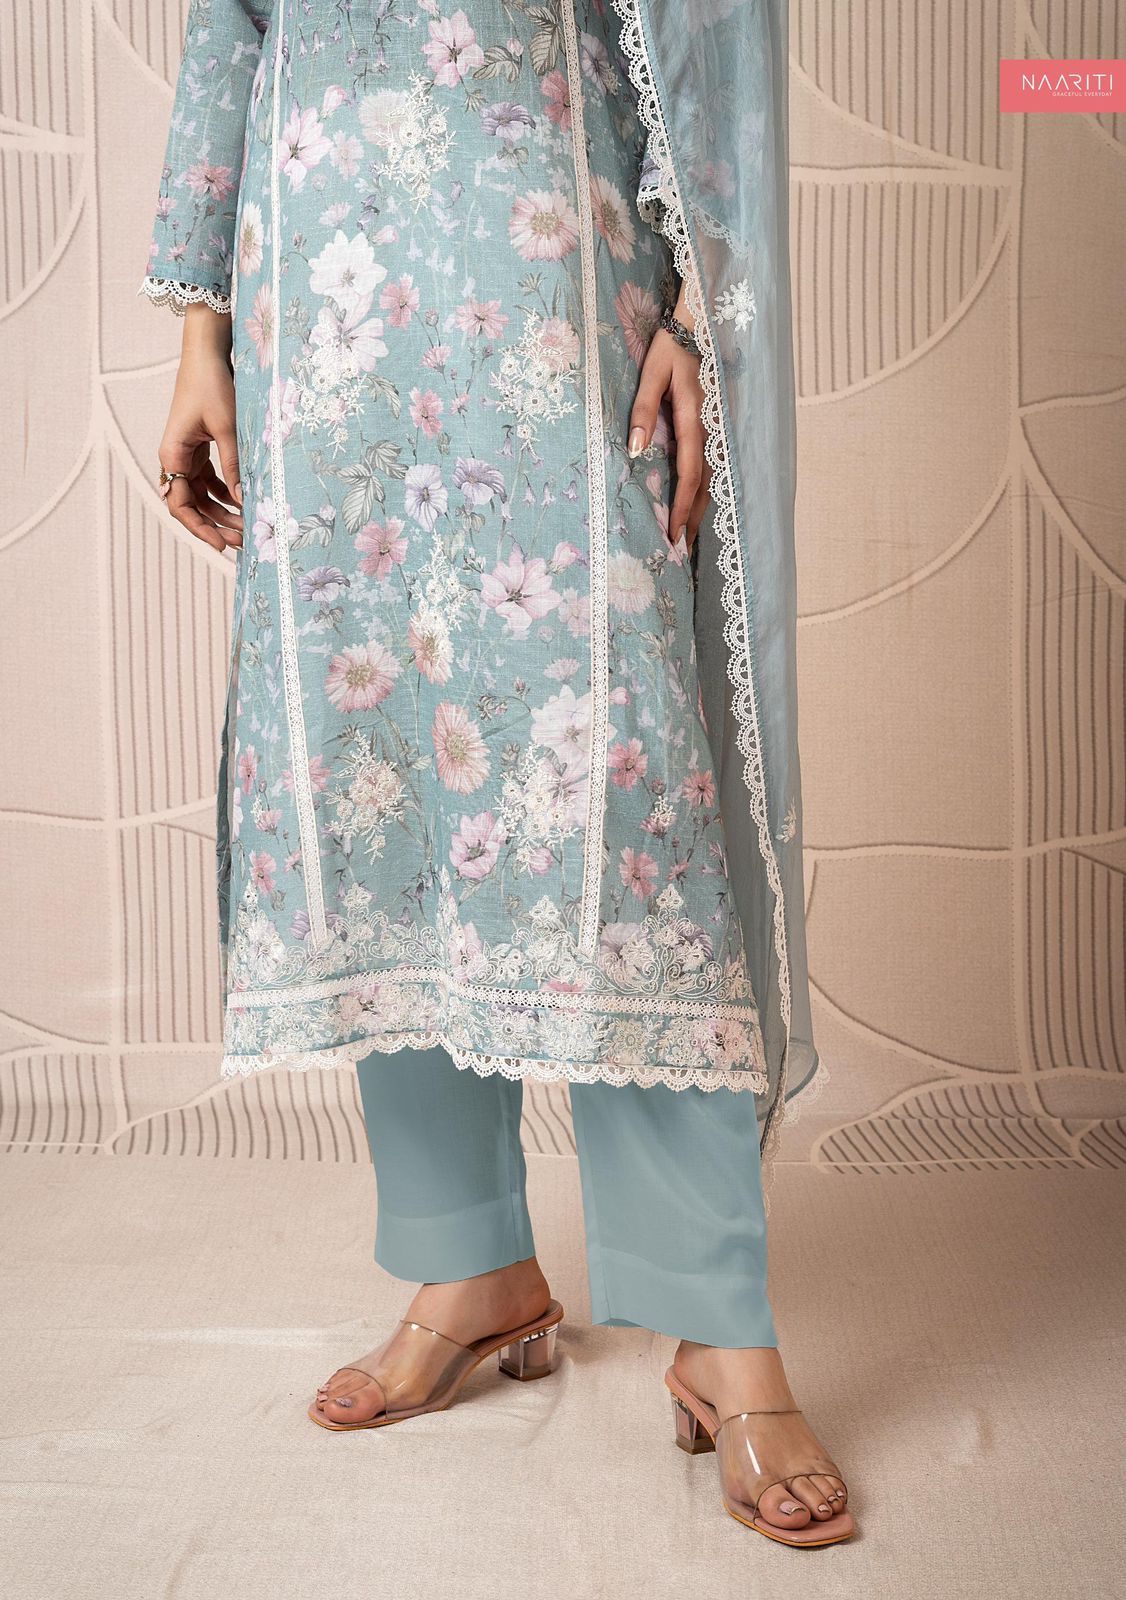 Teehi Naariti Linen Pant Style Suits